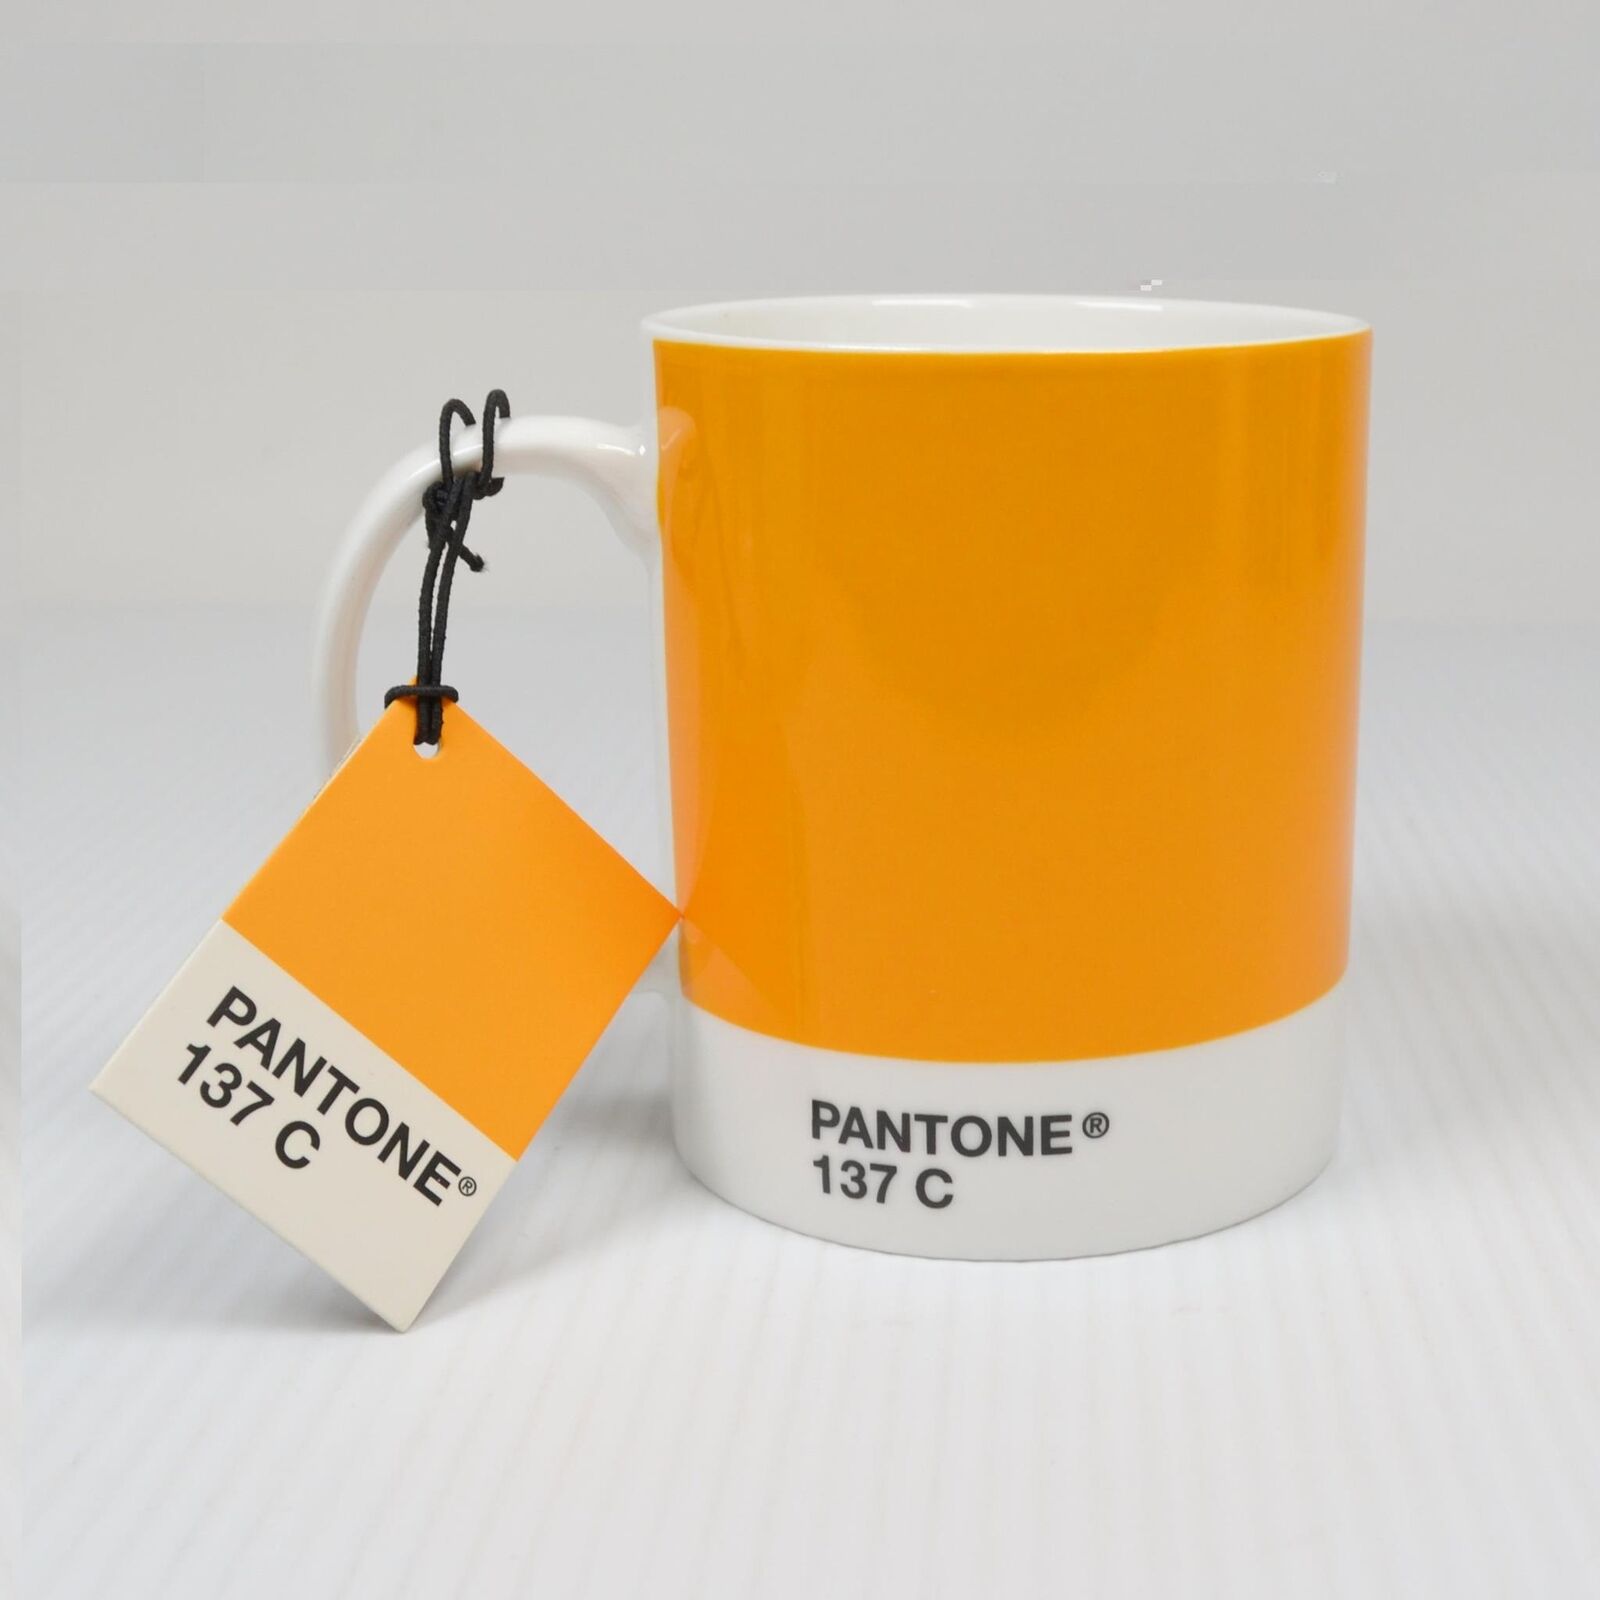 Pantone Coffee Mug - 137 C - Egg Yolk Orange - Sunset, Marmalade - NEW